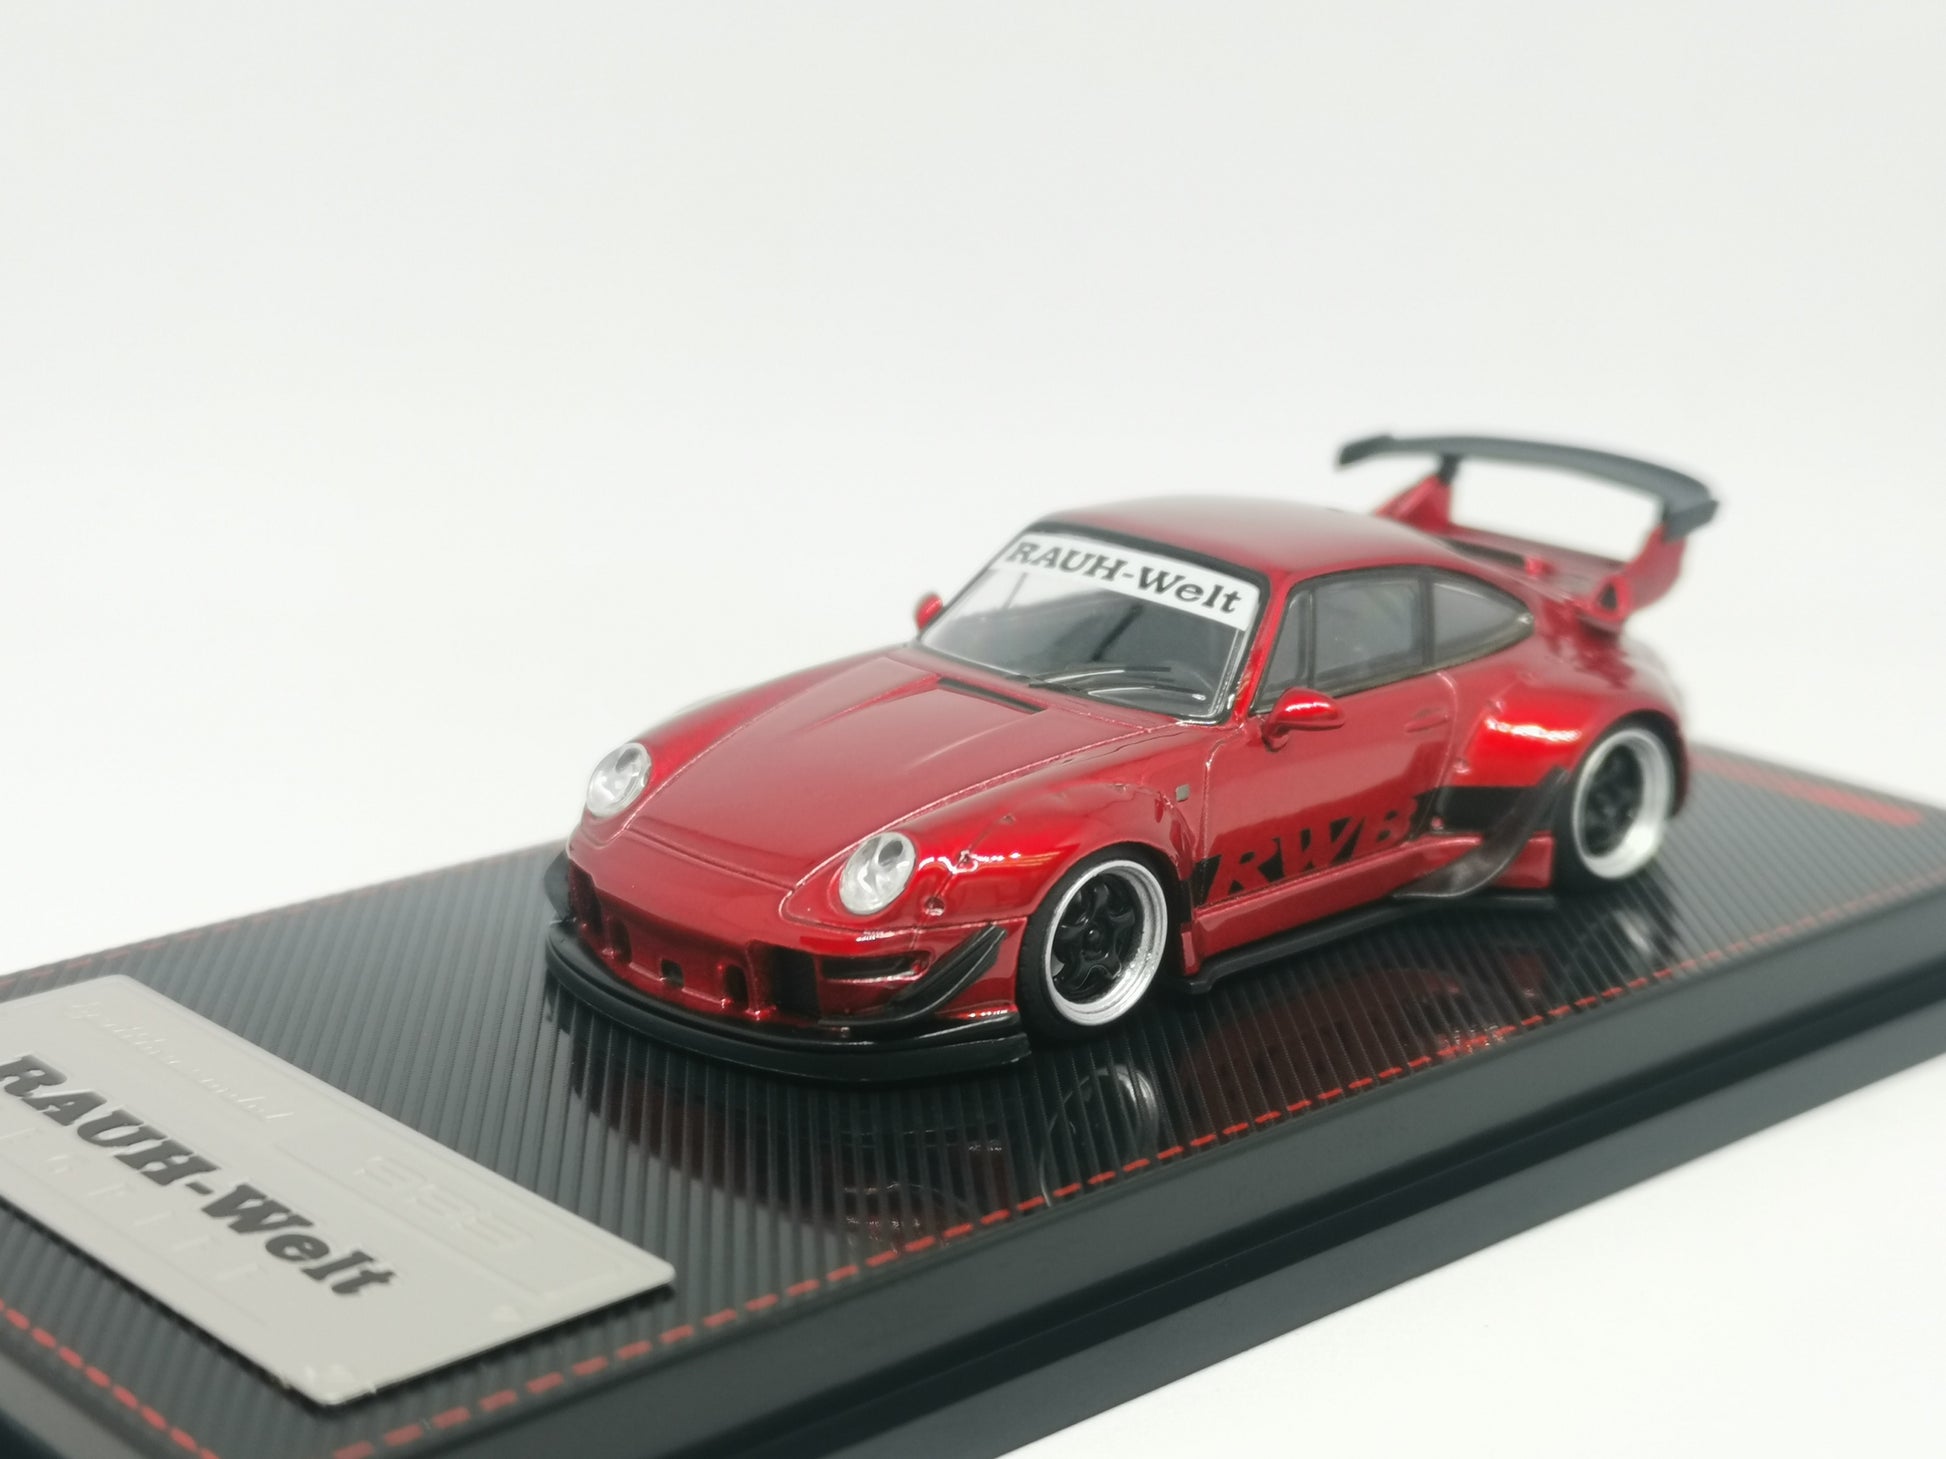 Ignition Model 1:64 Scale Porsche RWB 993 Red Metallic Ignition Model